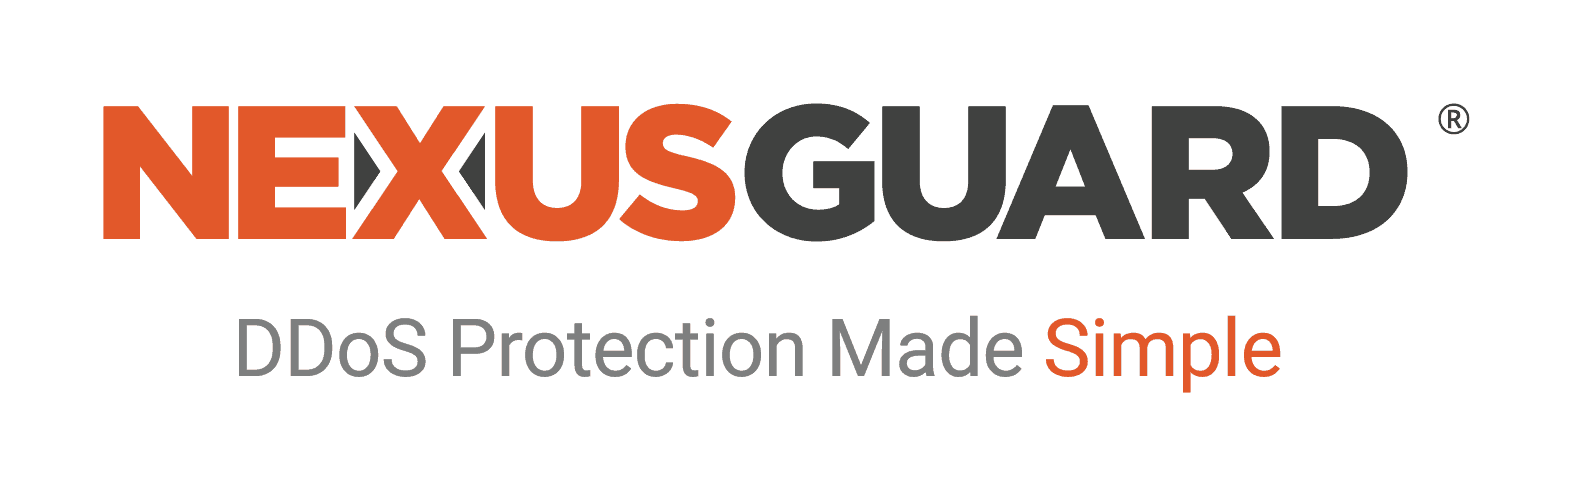 Nexusguard_tagline_rgb_center-1